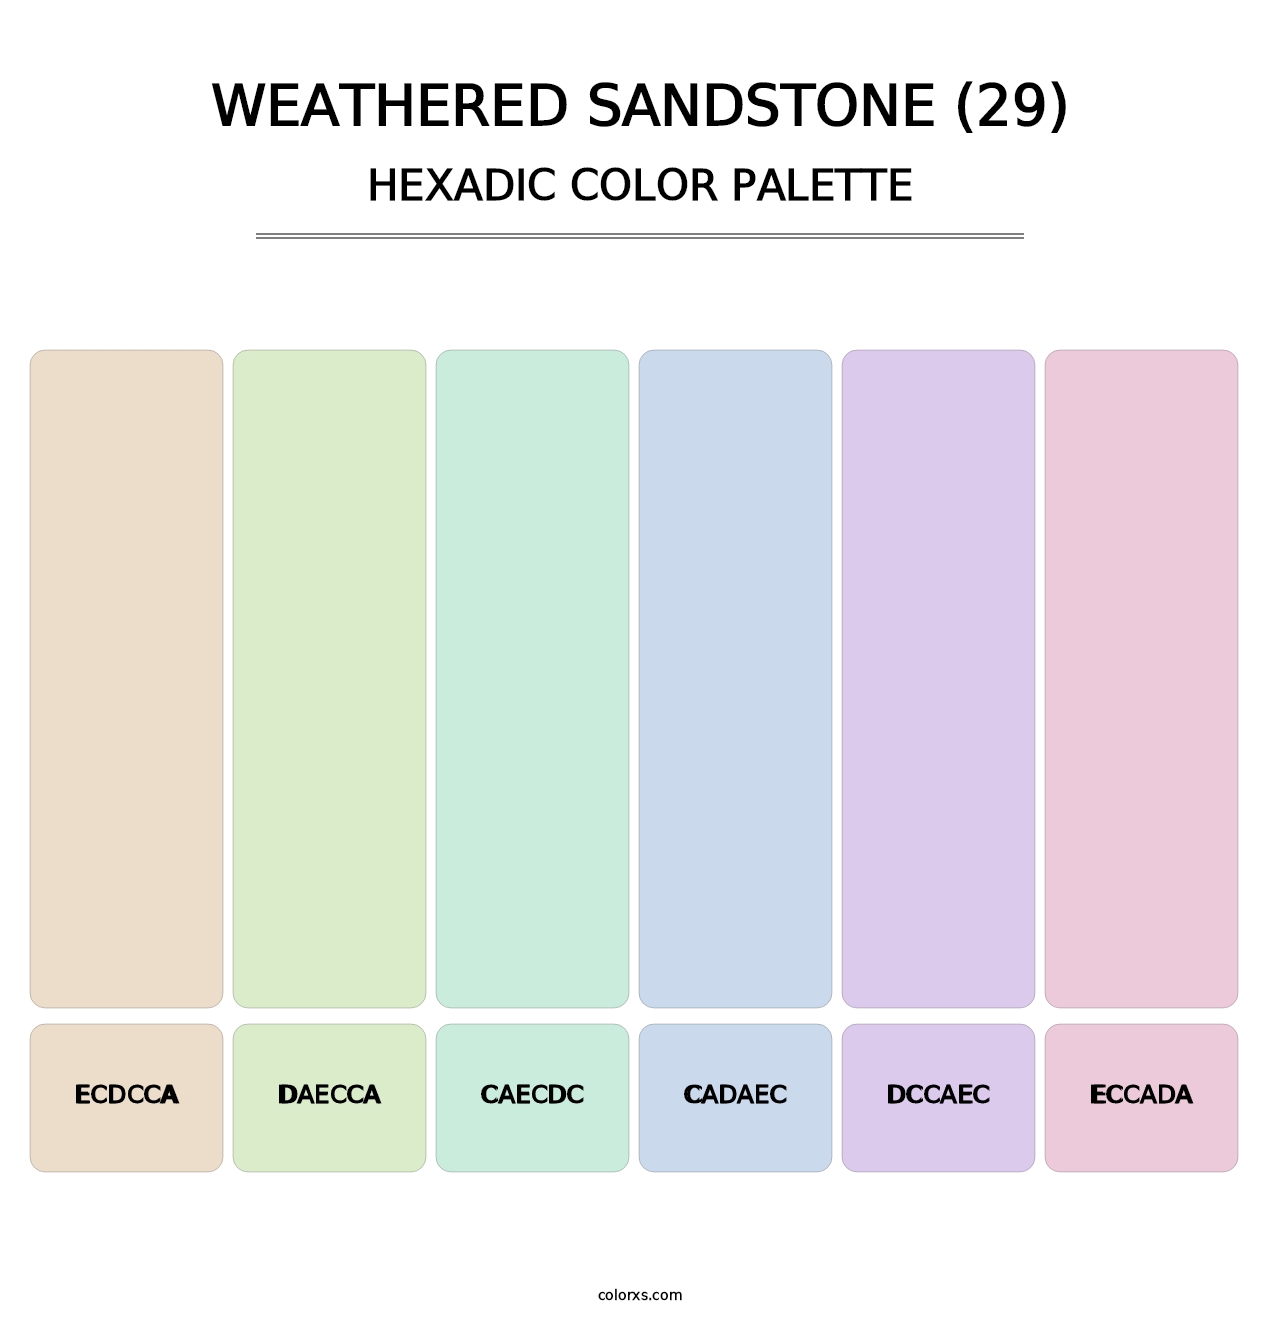 Weathered Sandstone (29) - Hexadic Color Palette